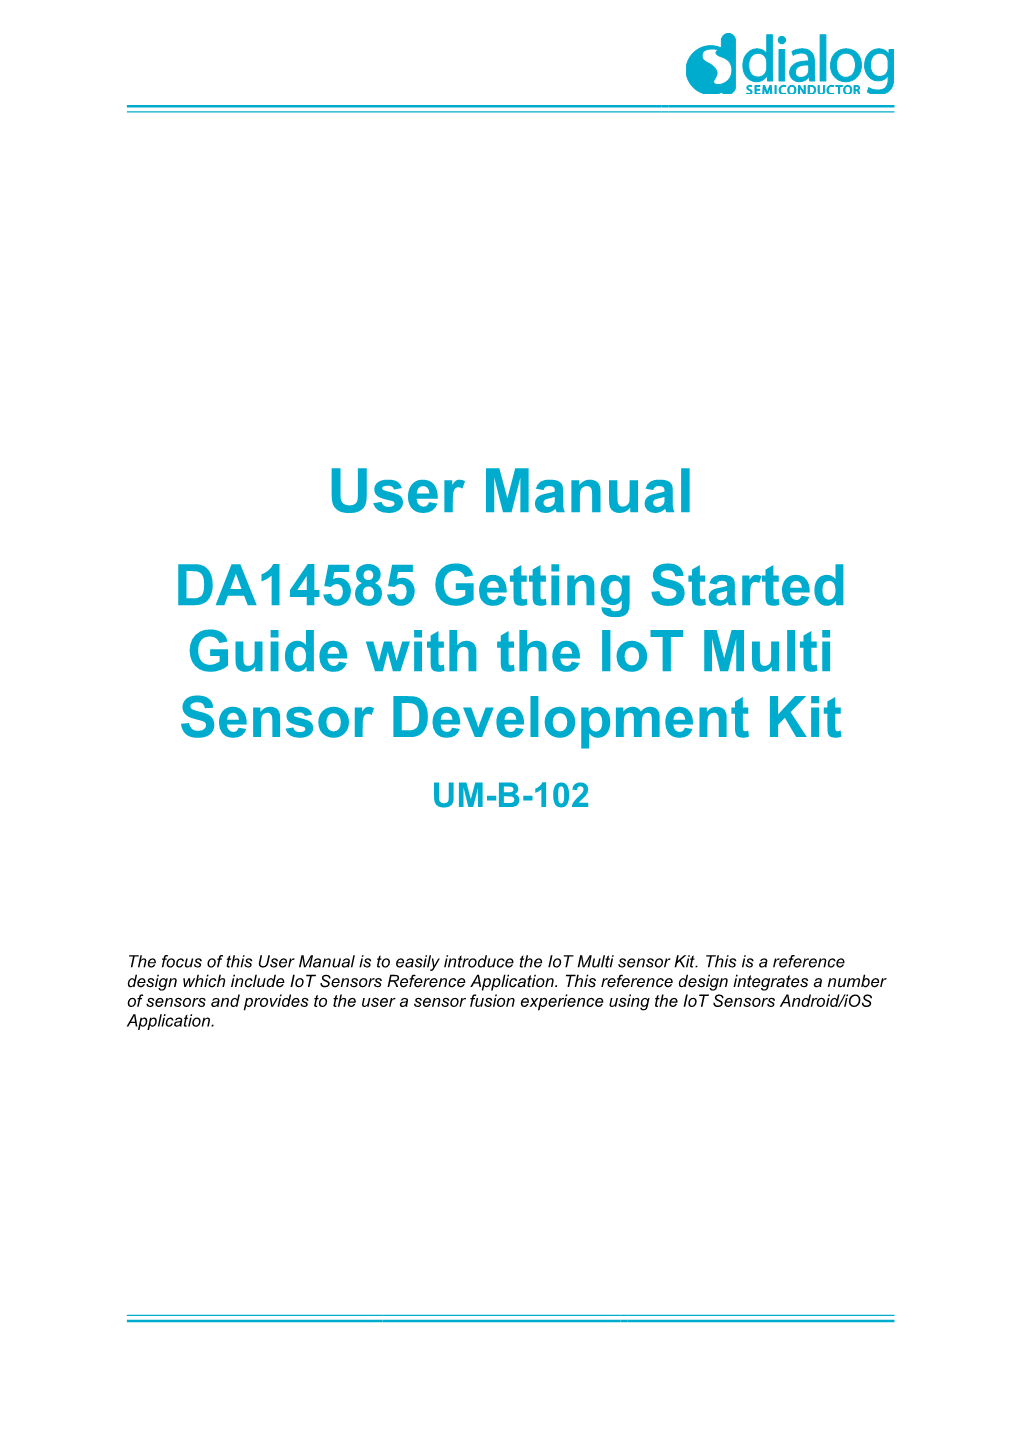 DA14585 Getting Started Guide with the Iot Multi Sensor Development Kit UM-B-102